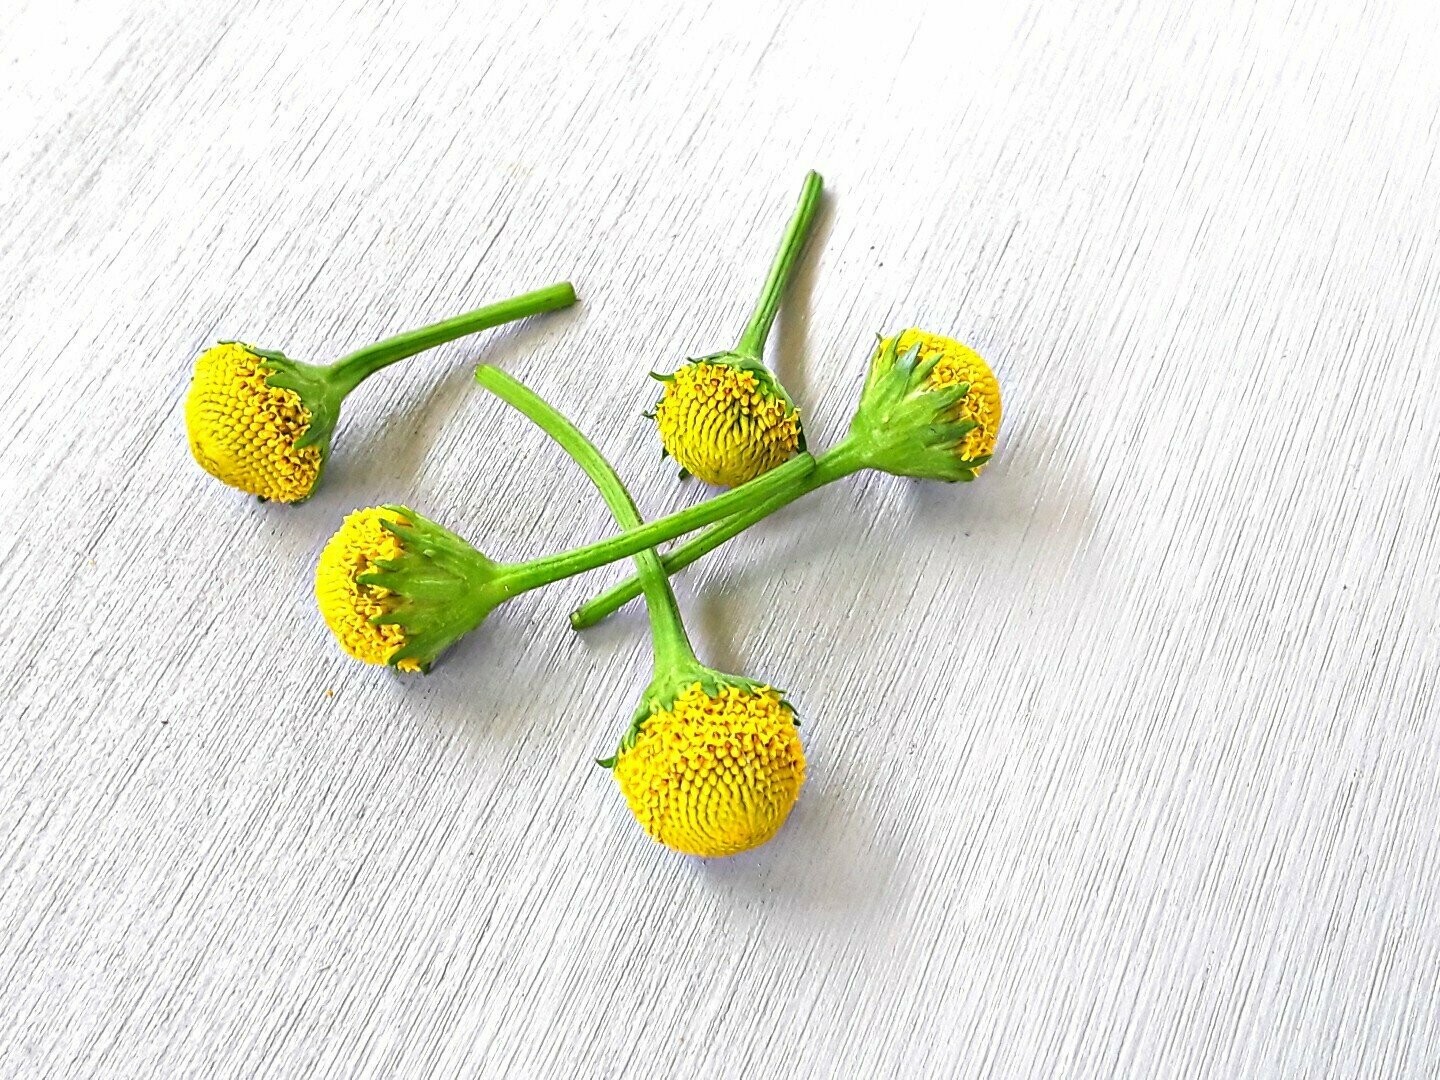 Fresh Buzz Button Flowers (Spilanthes). Lemon Drop variety.